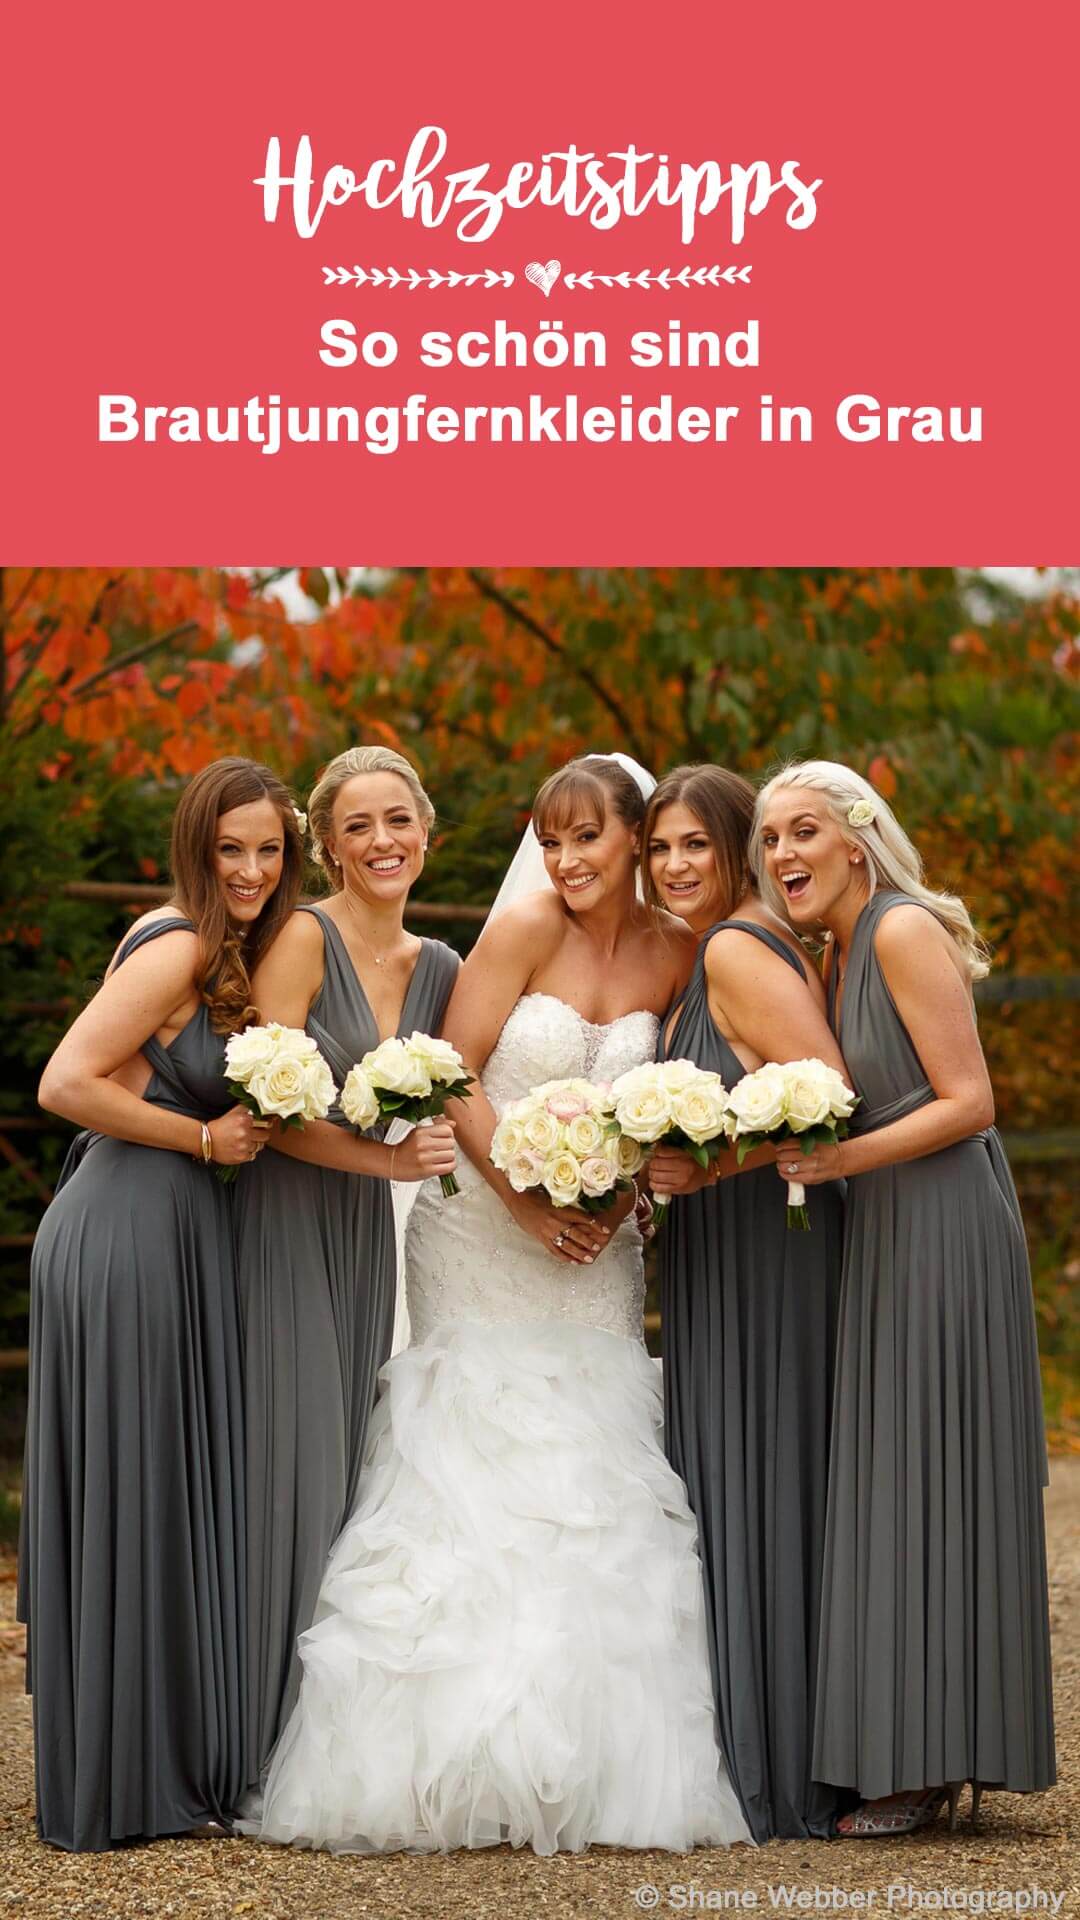 Graue Brautjungfernkleider - Bridesmaid dresses gray and versatile I photo story with tips & ideas